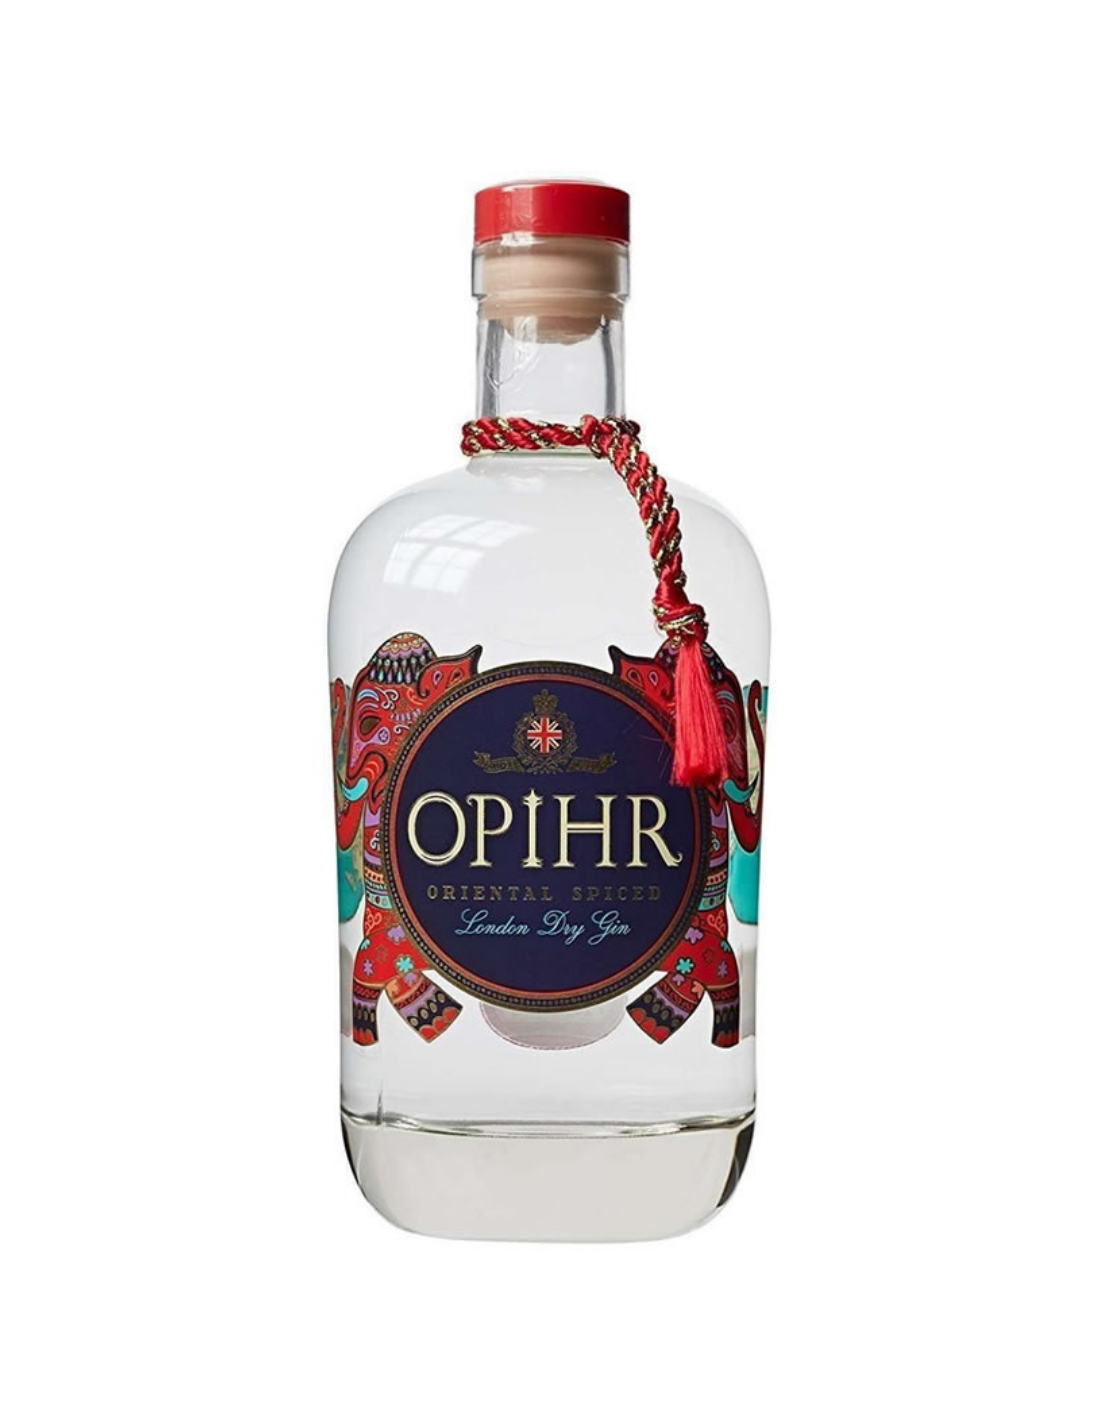 Gin Opihr Oriental Spiced, 42.5% alc., 0.7L, Anglia alcooldiscount.ro